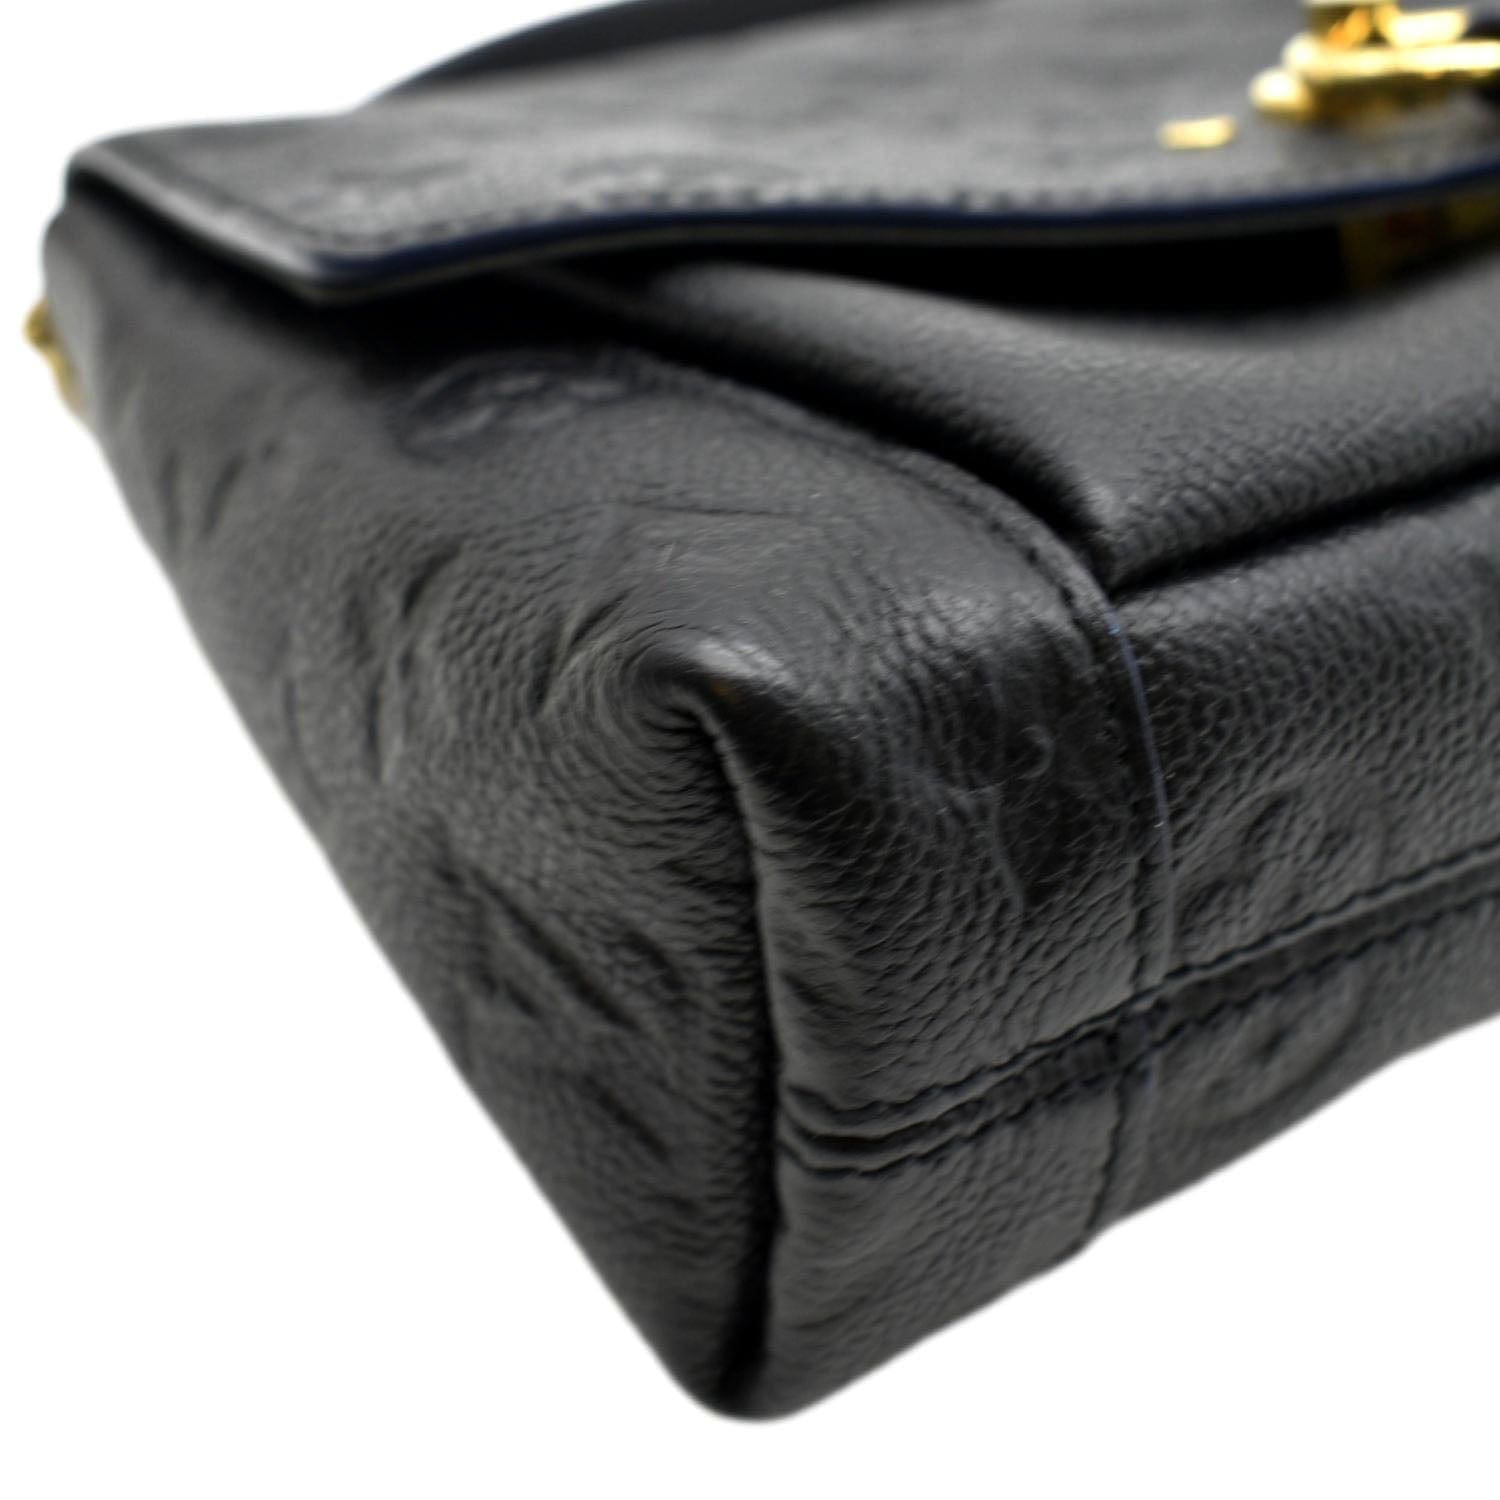 Louis Vuitton Blanche BB Blue Jean/ Creme Monogram Empreinte Leather Bag